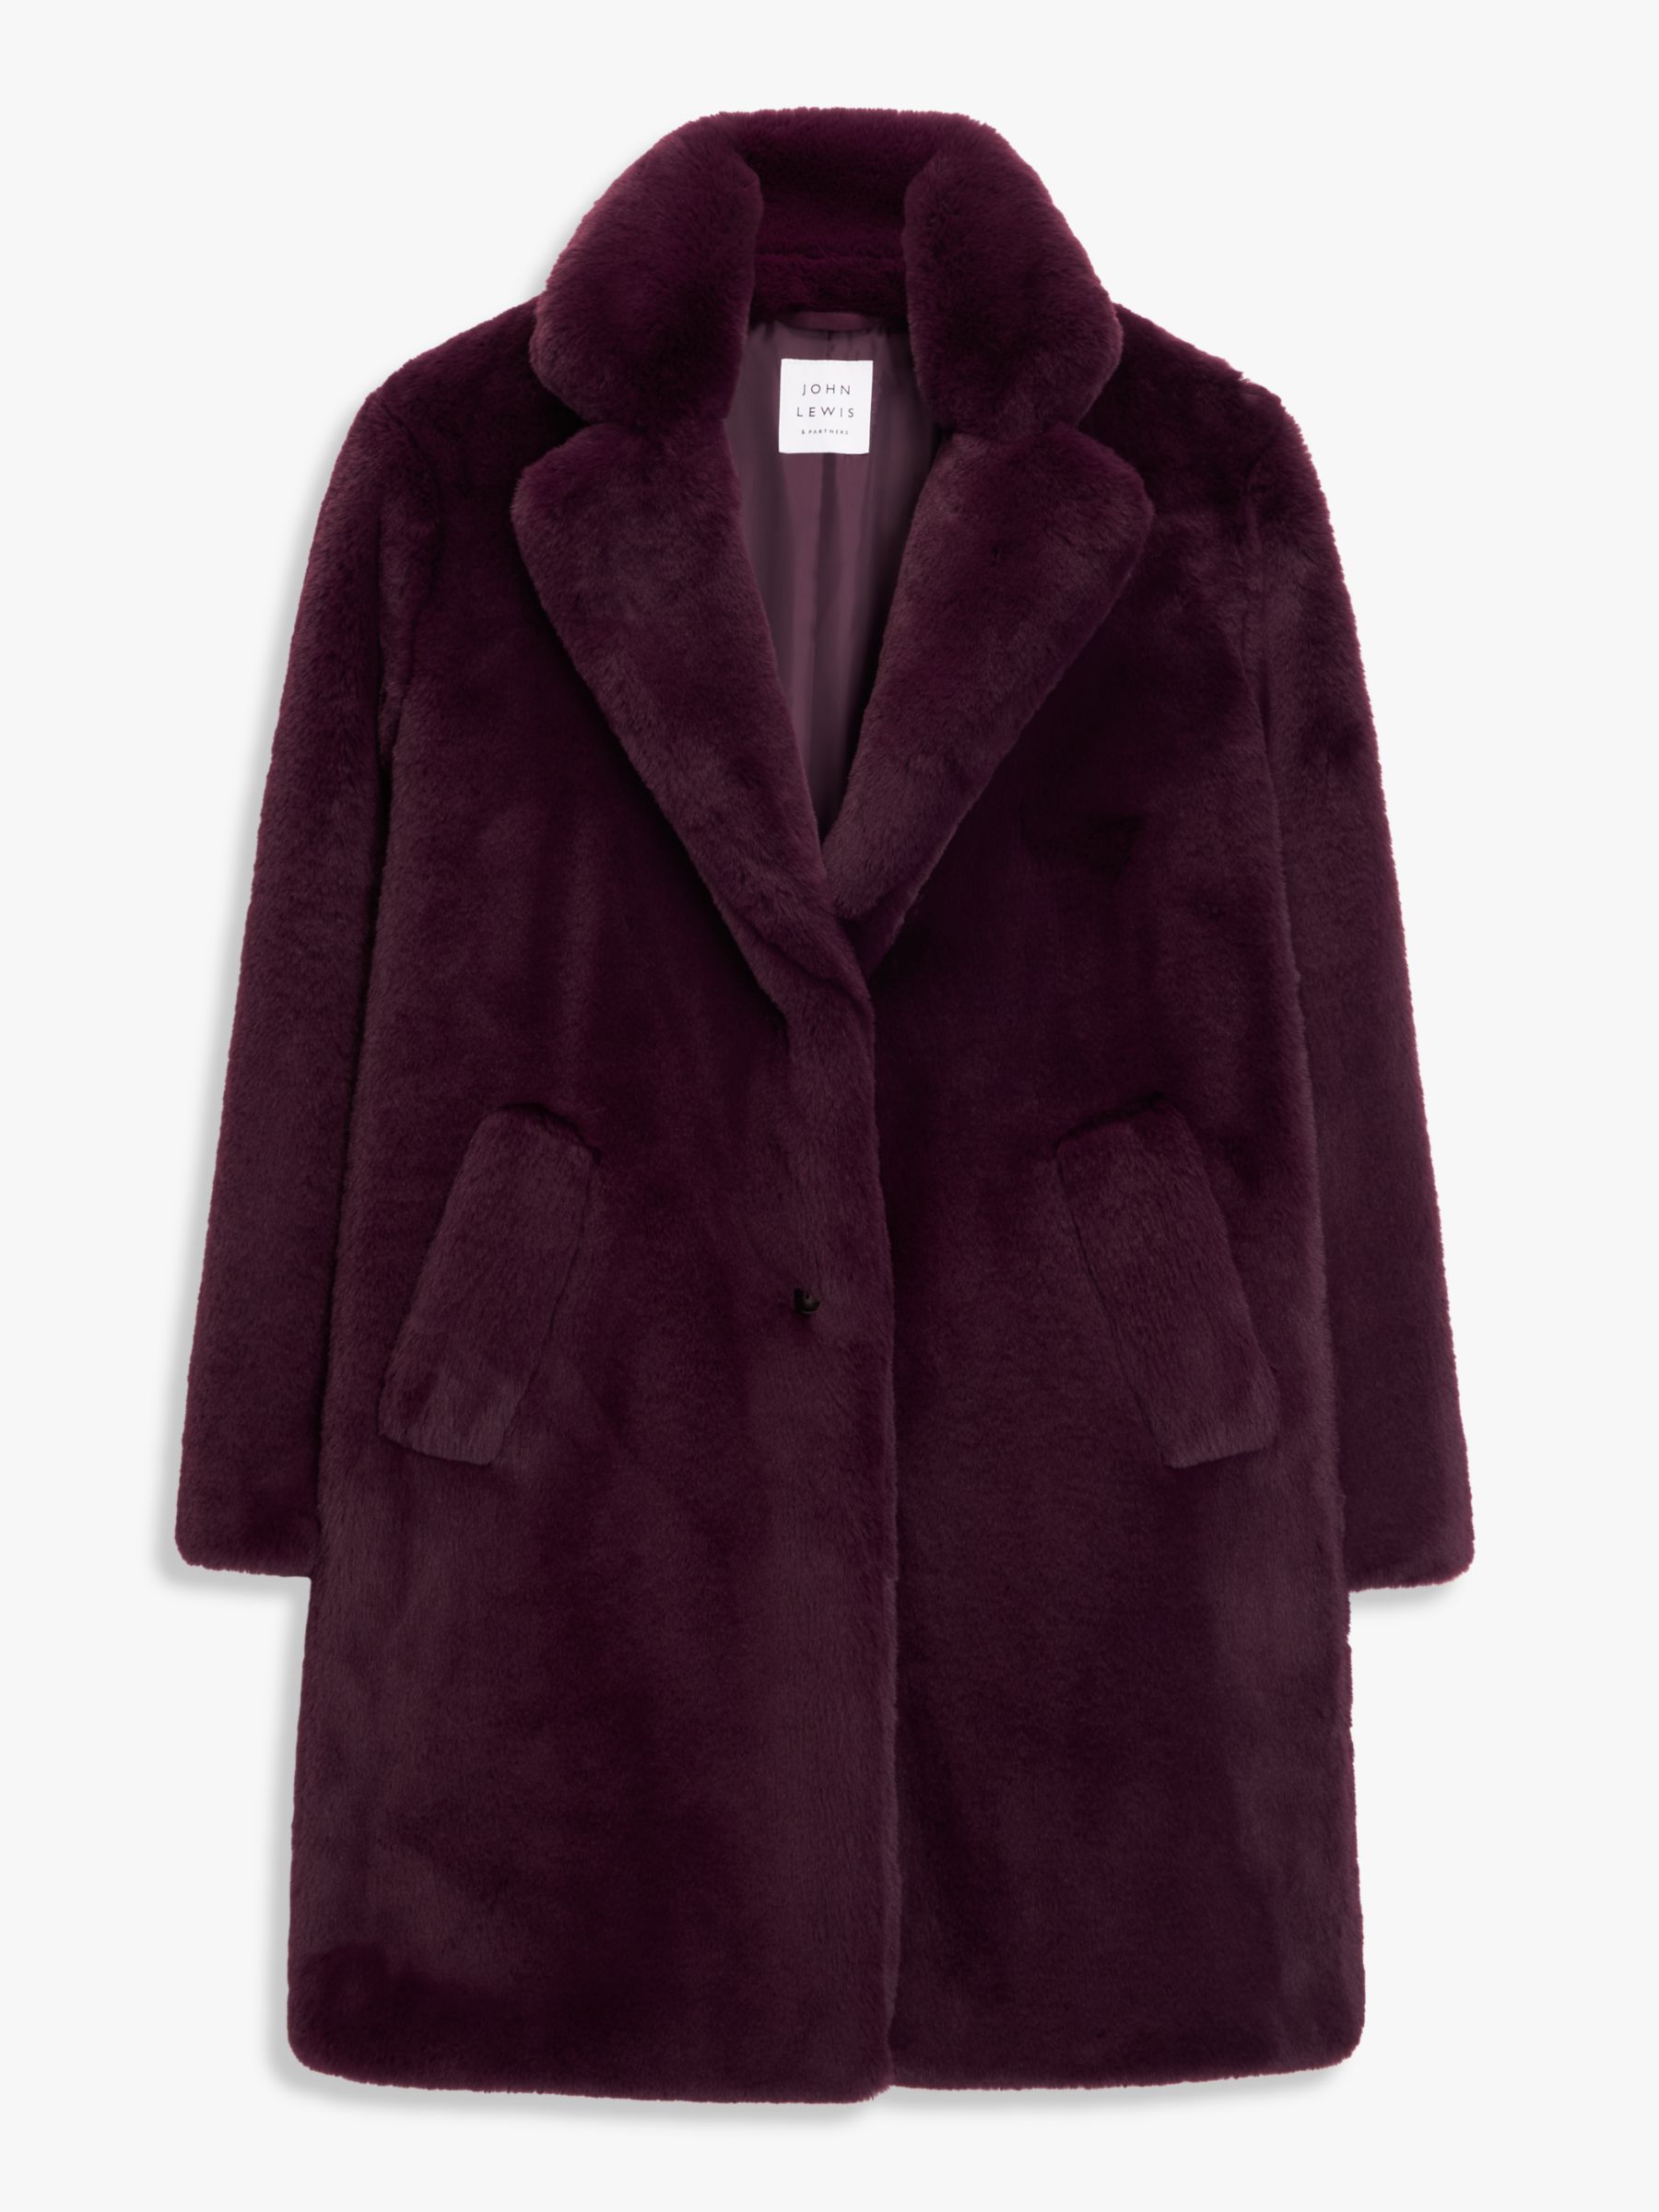 John Lewis Faux Fur Coat, Burgundy at John Lewis & Partners